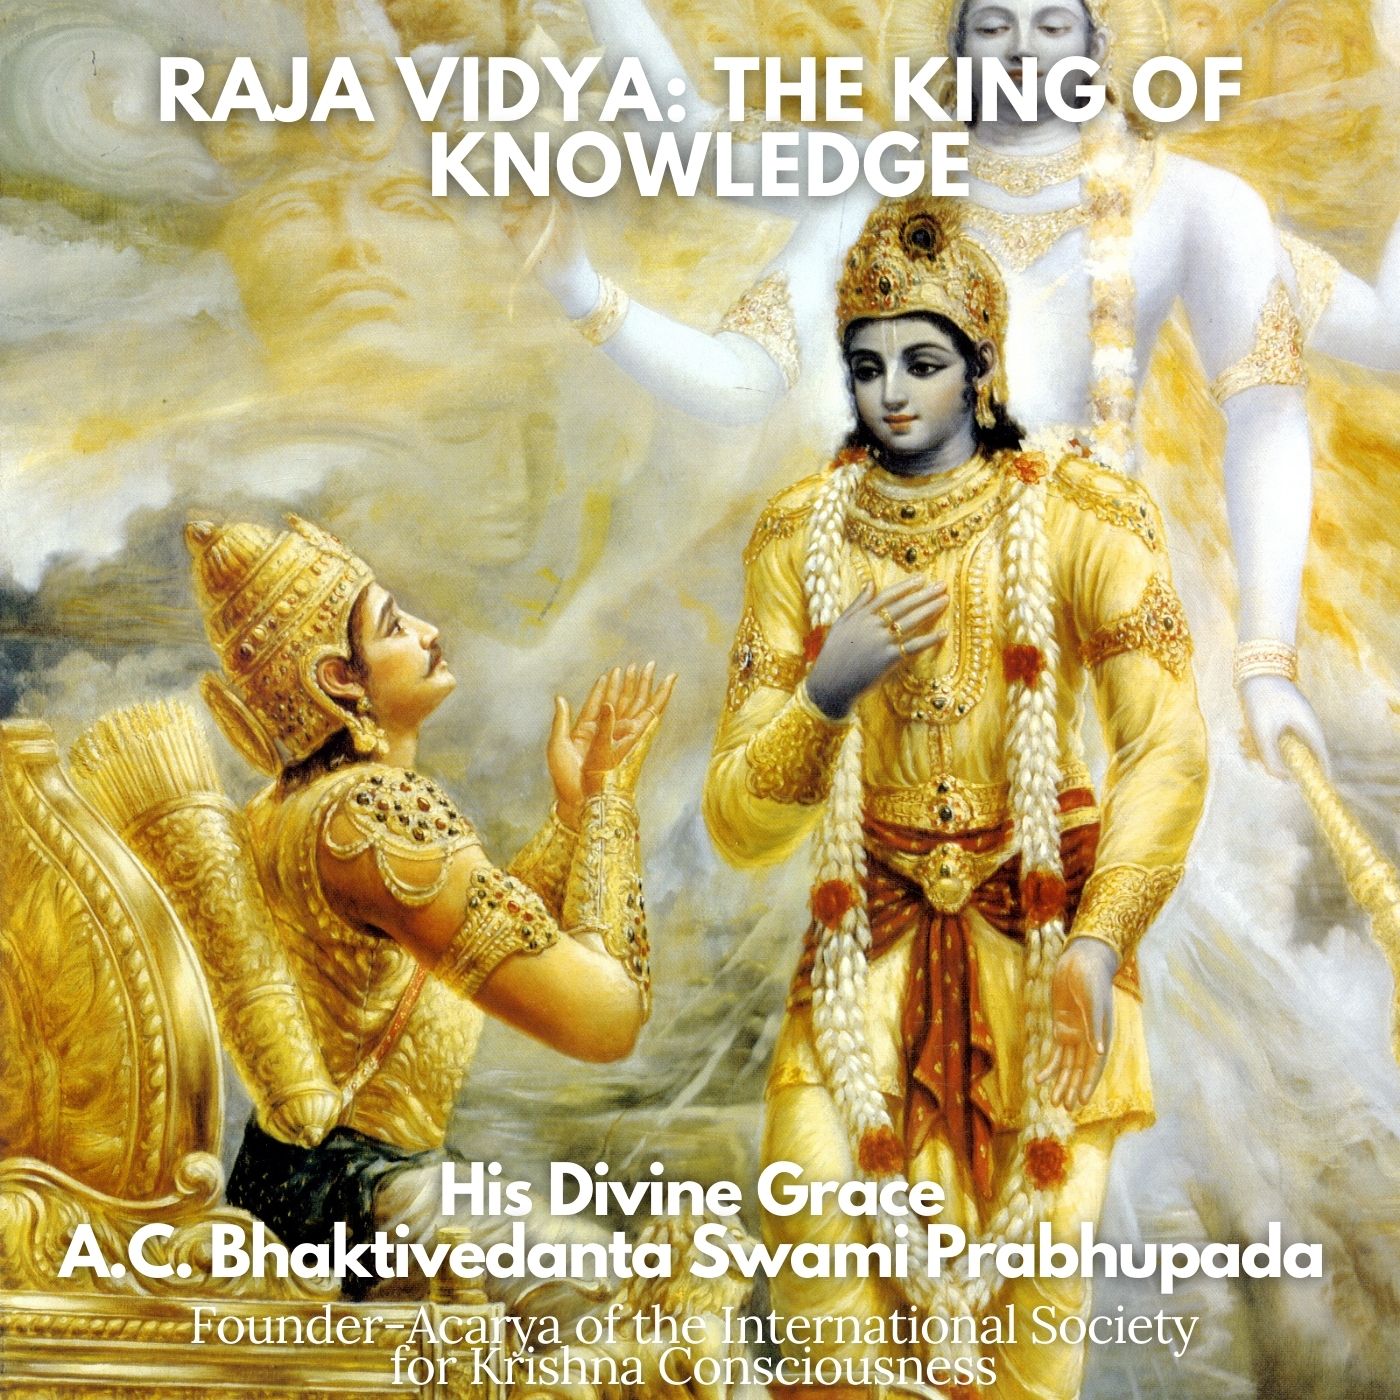 Raja Vidya: The King of Knowledge